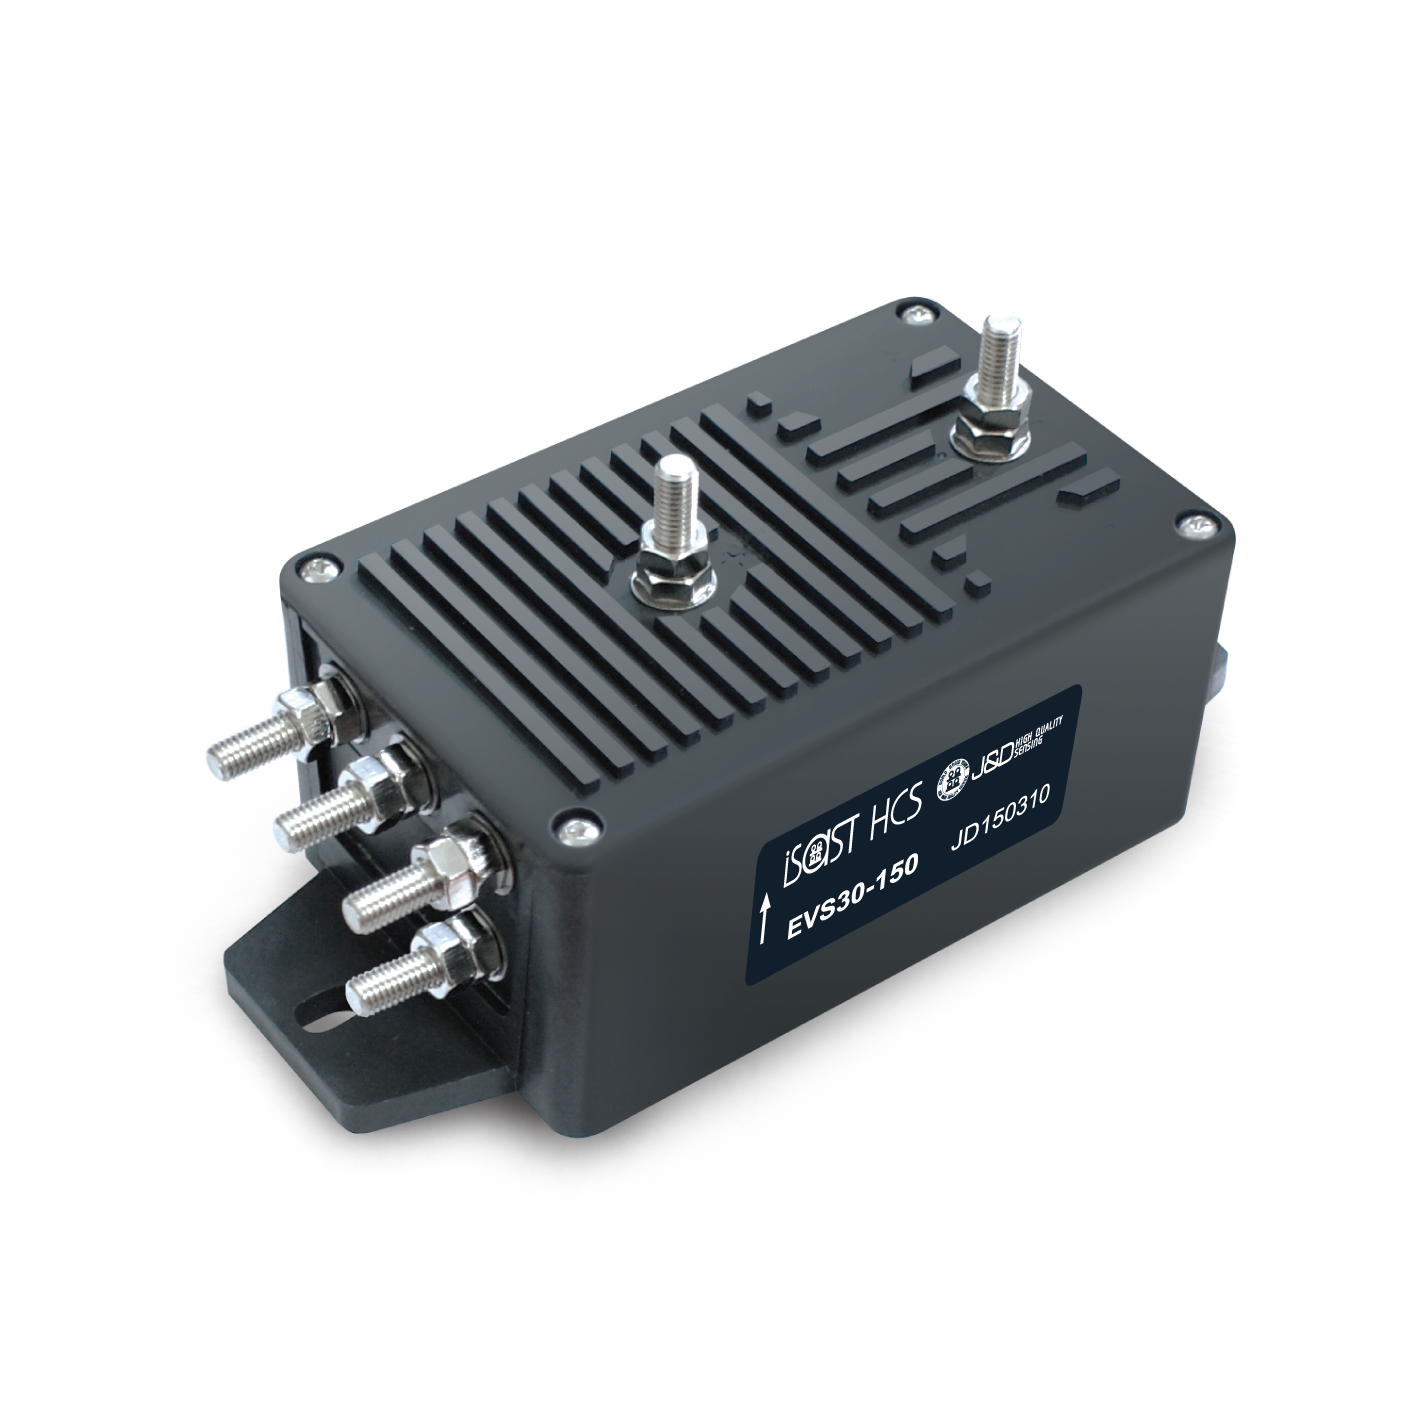 Voltage transducer: EVS30